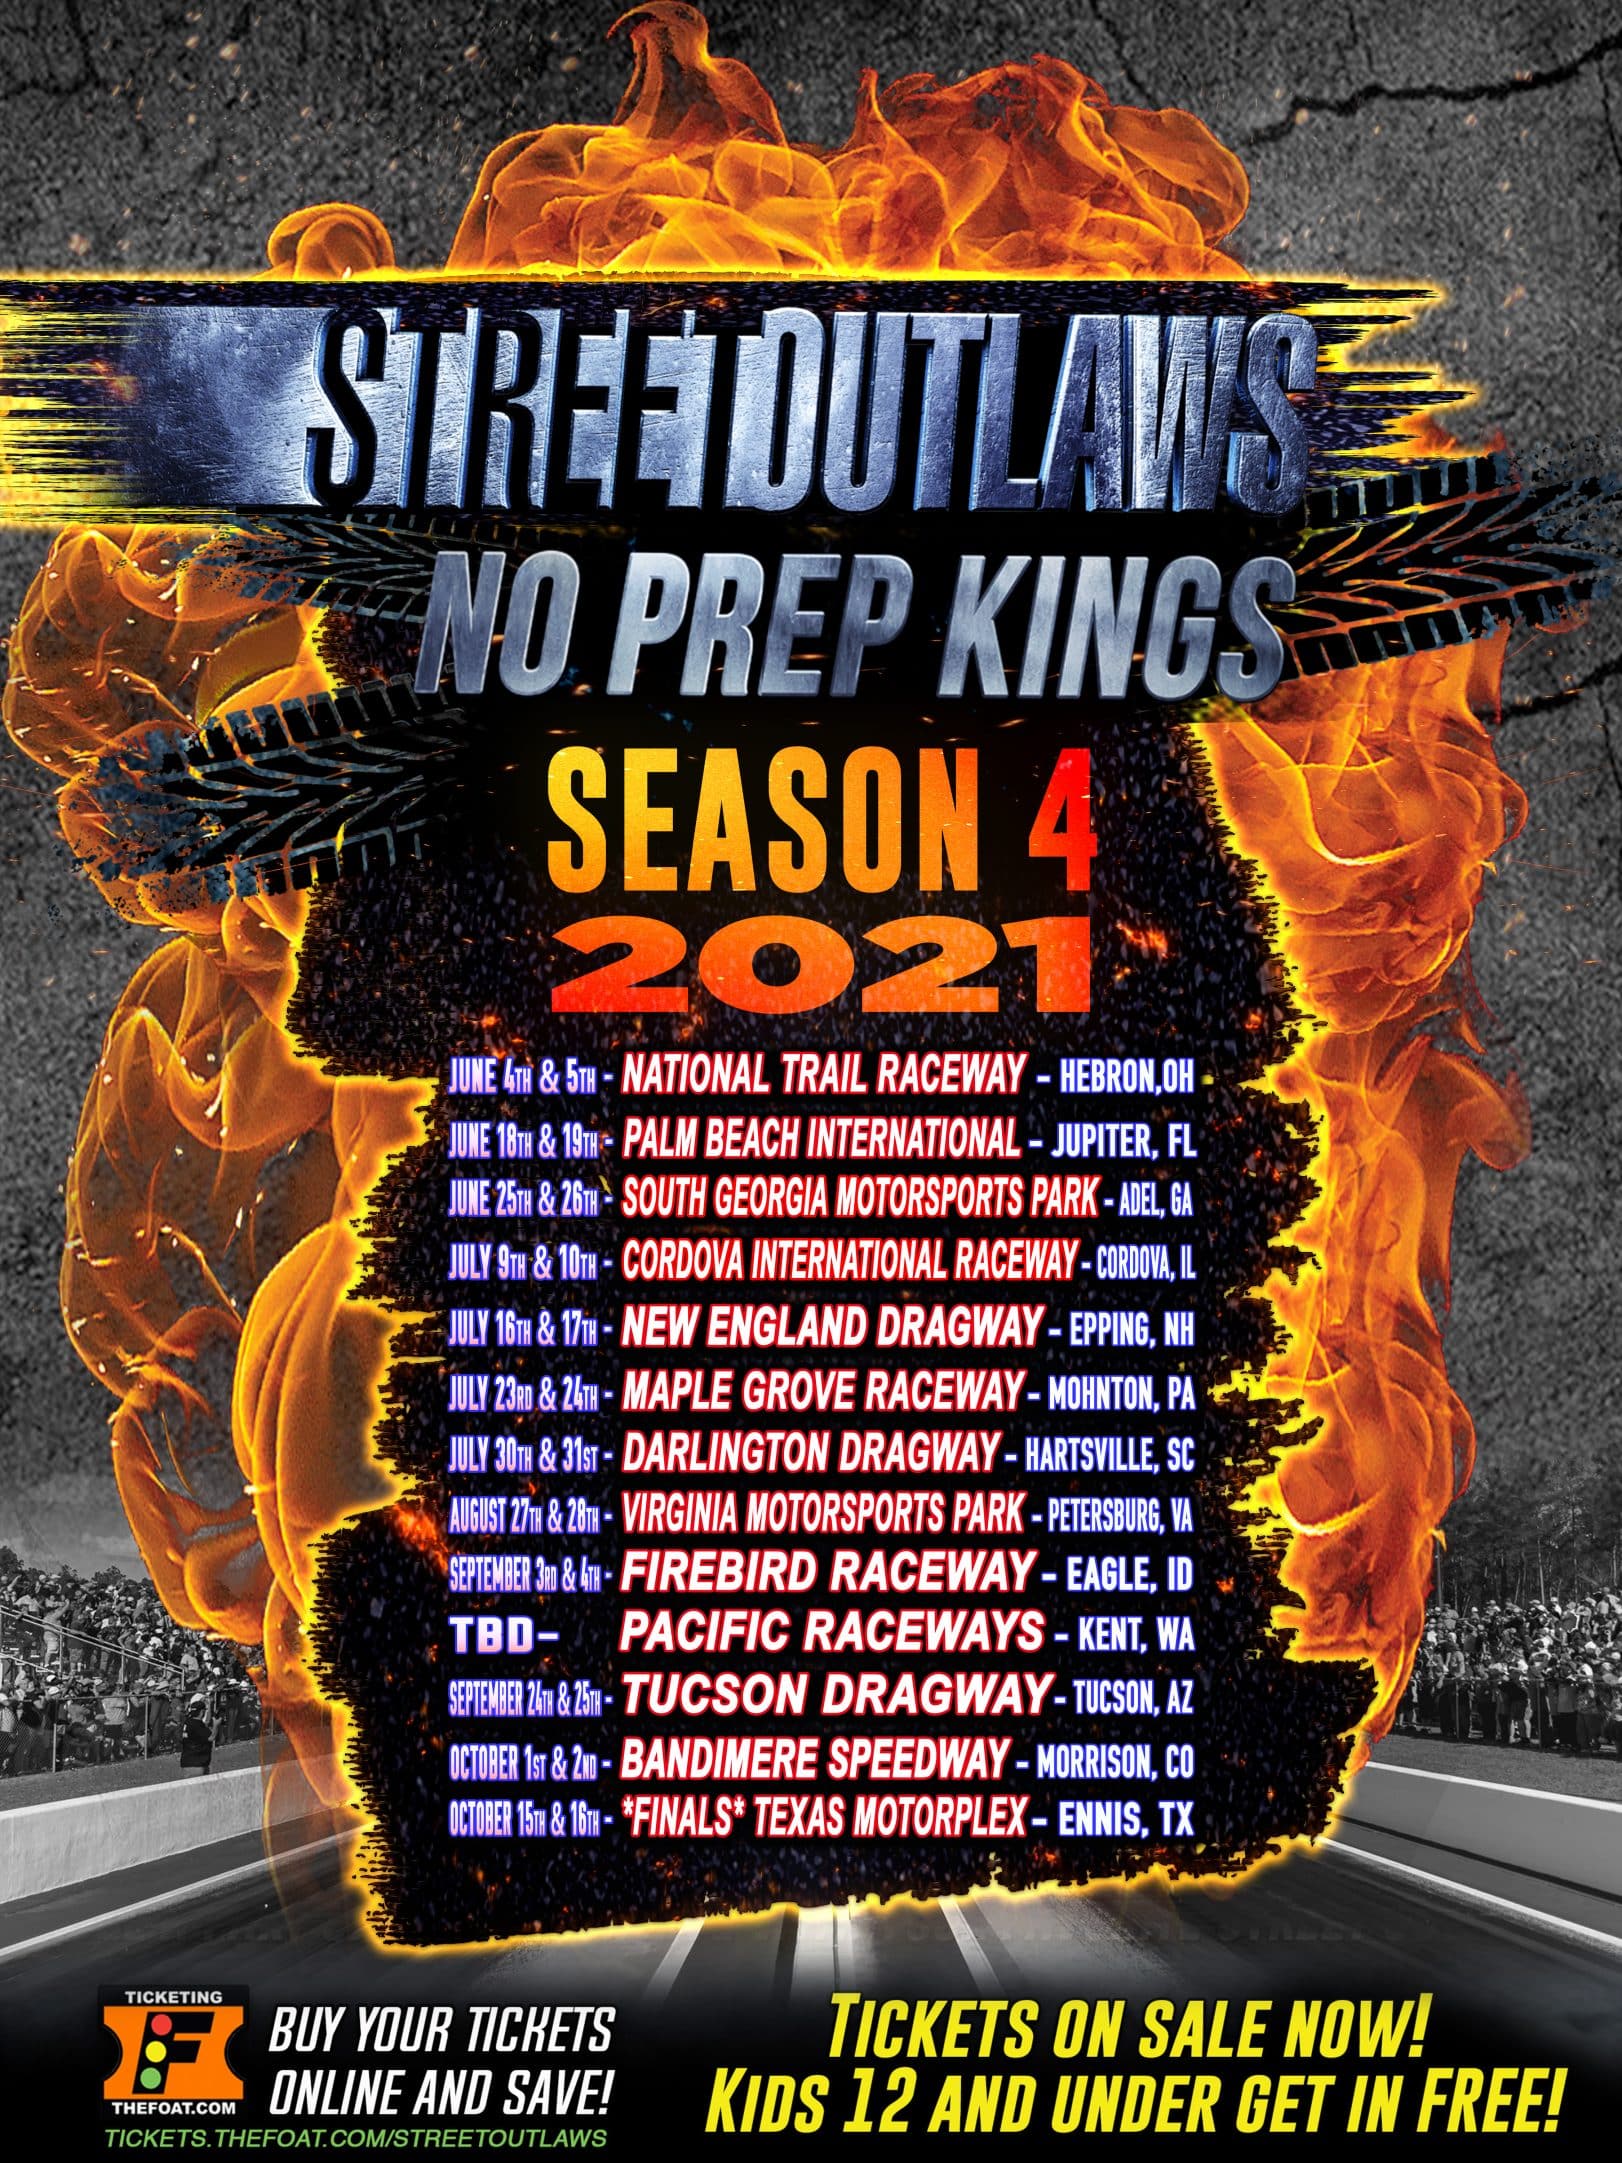 No prep kings season 6